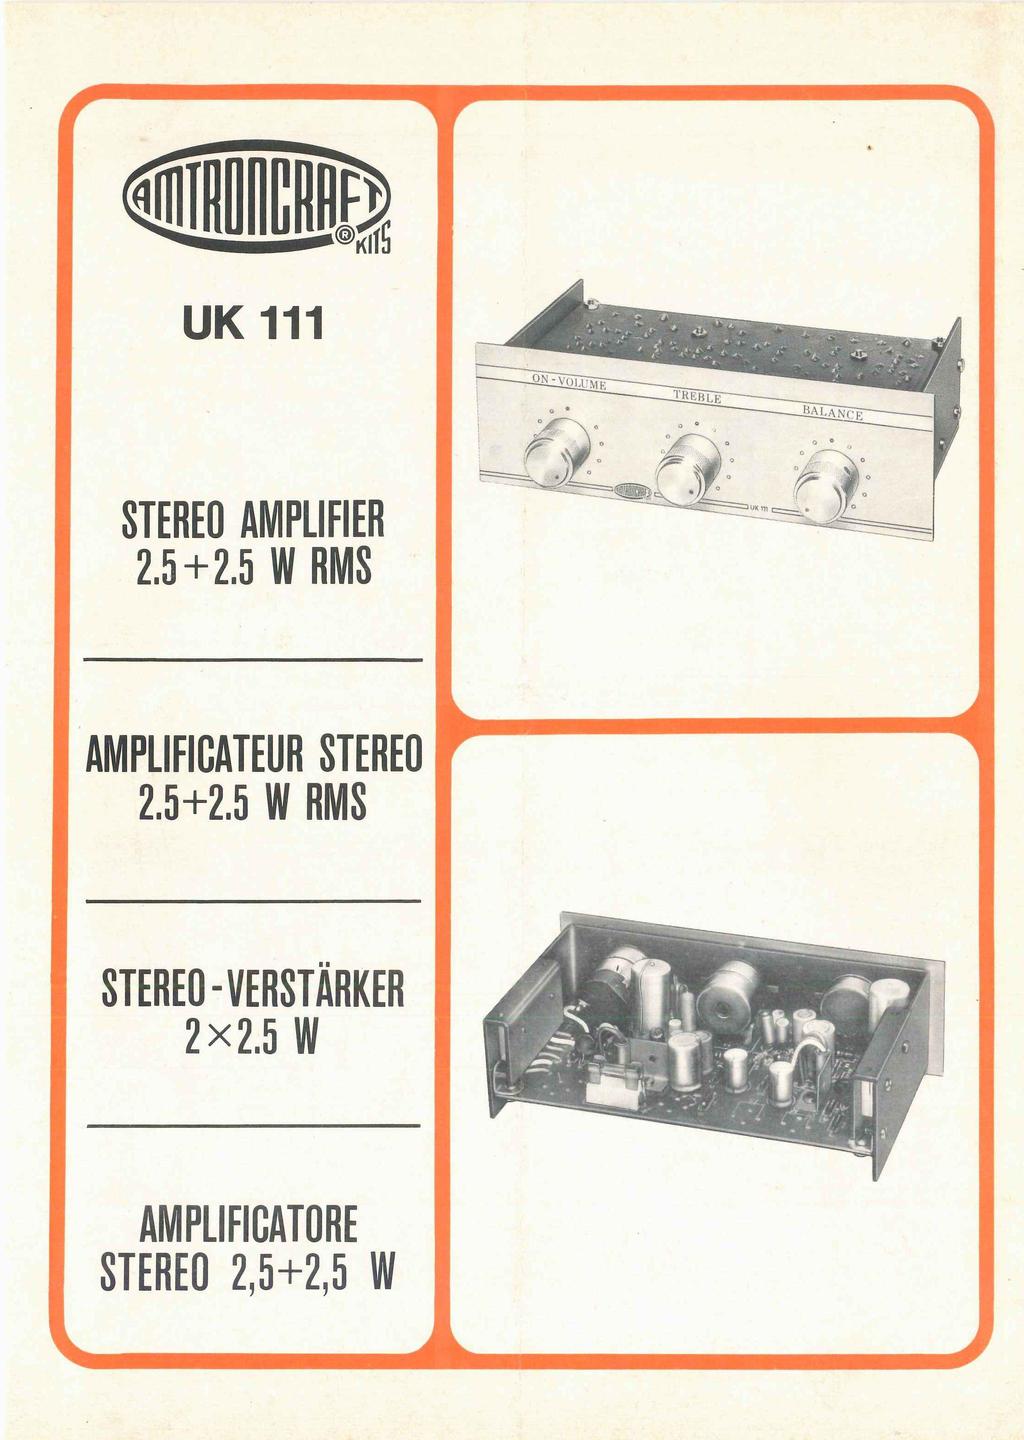 UK 111 STEREO AMPLIFIER 2.5+2.5 W RMS AMPLIFICATEUR STEREO 2.5+2.5 W RMS STEREO-VERSTÄRKER 2x2.